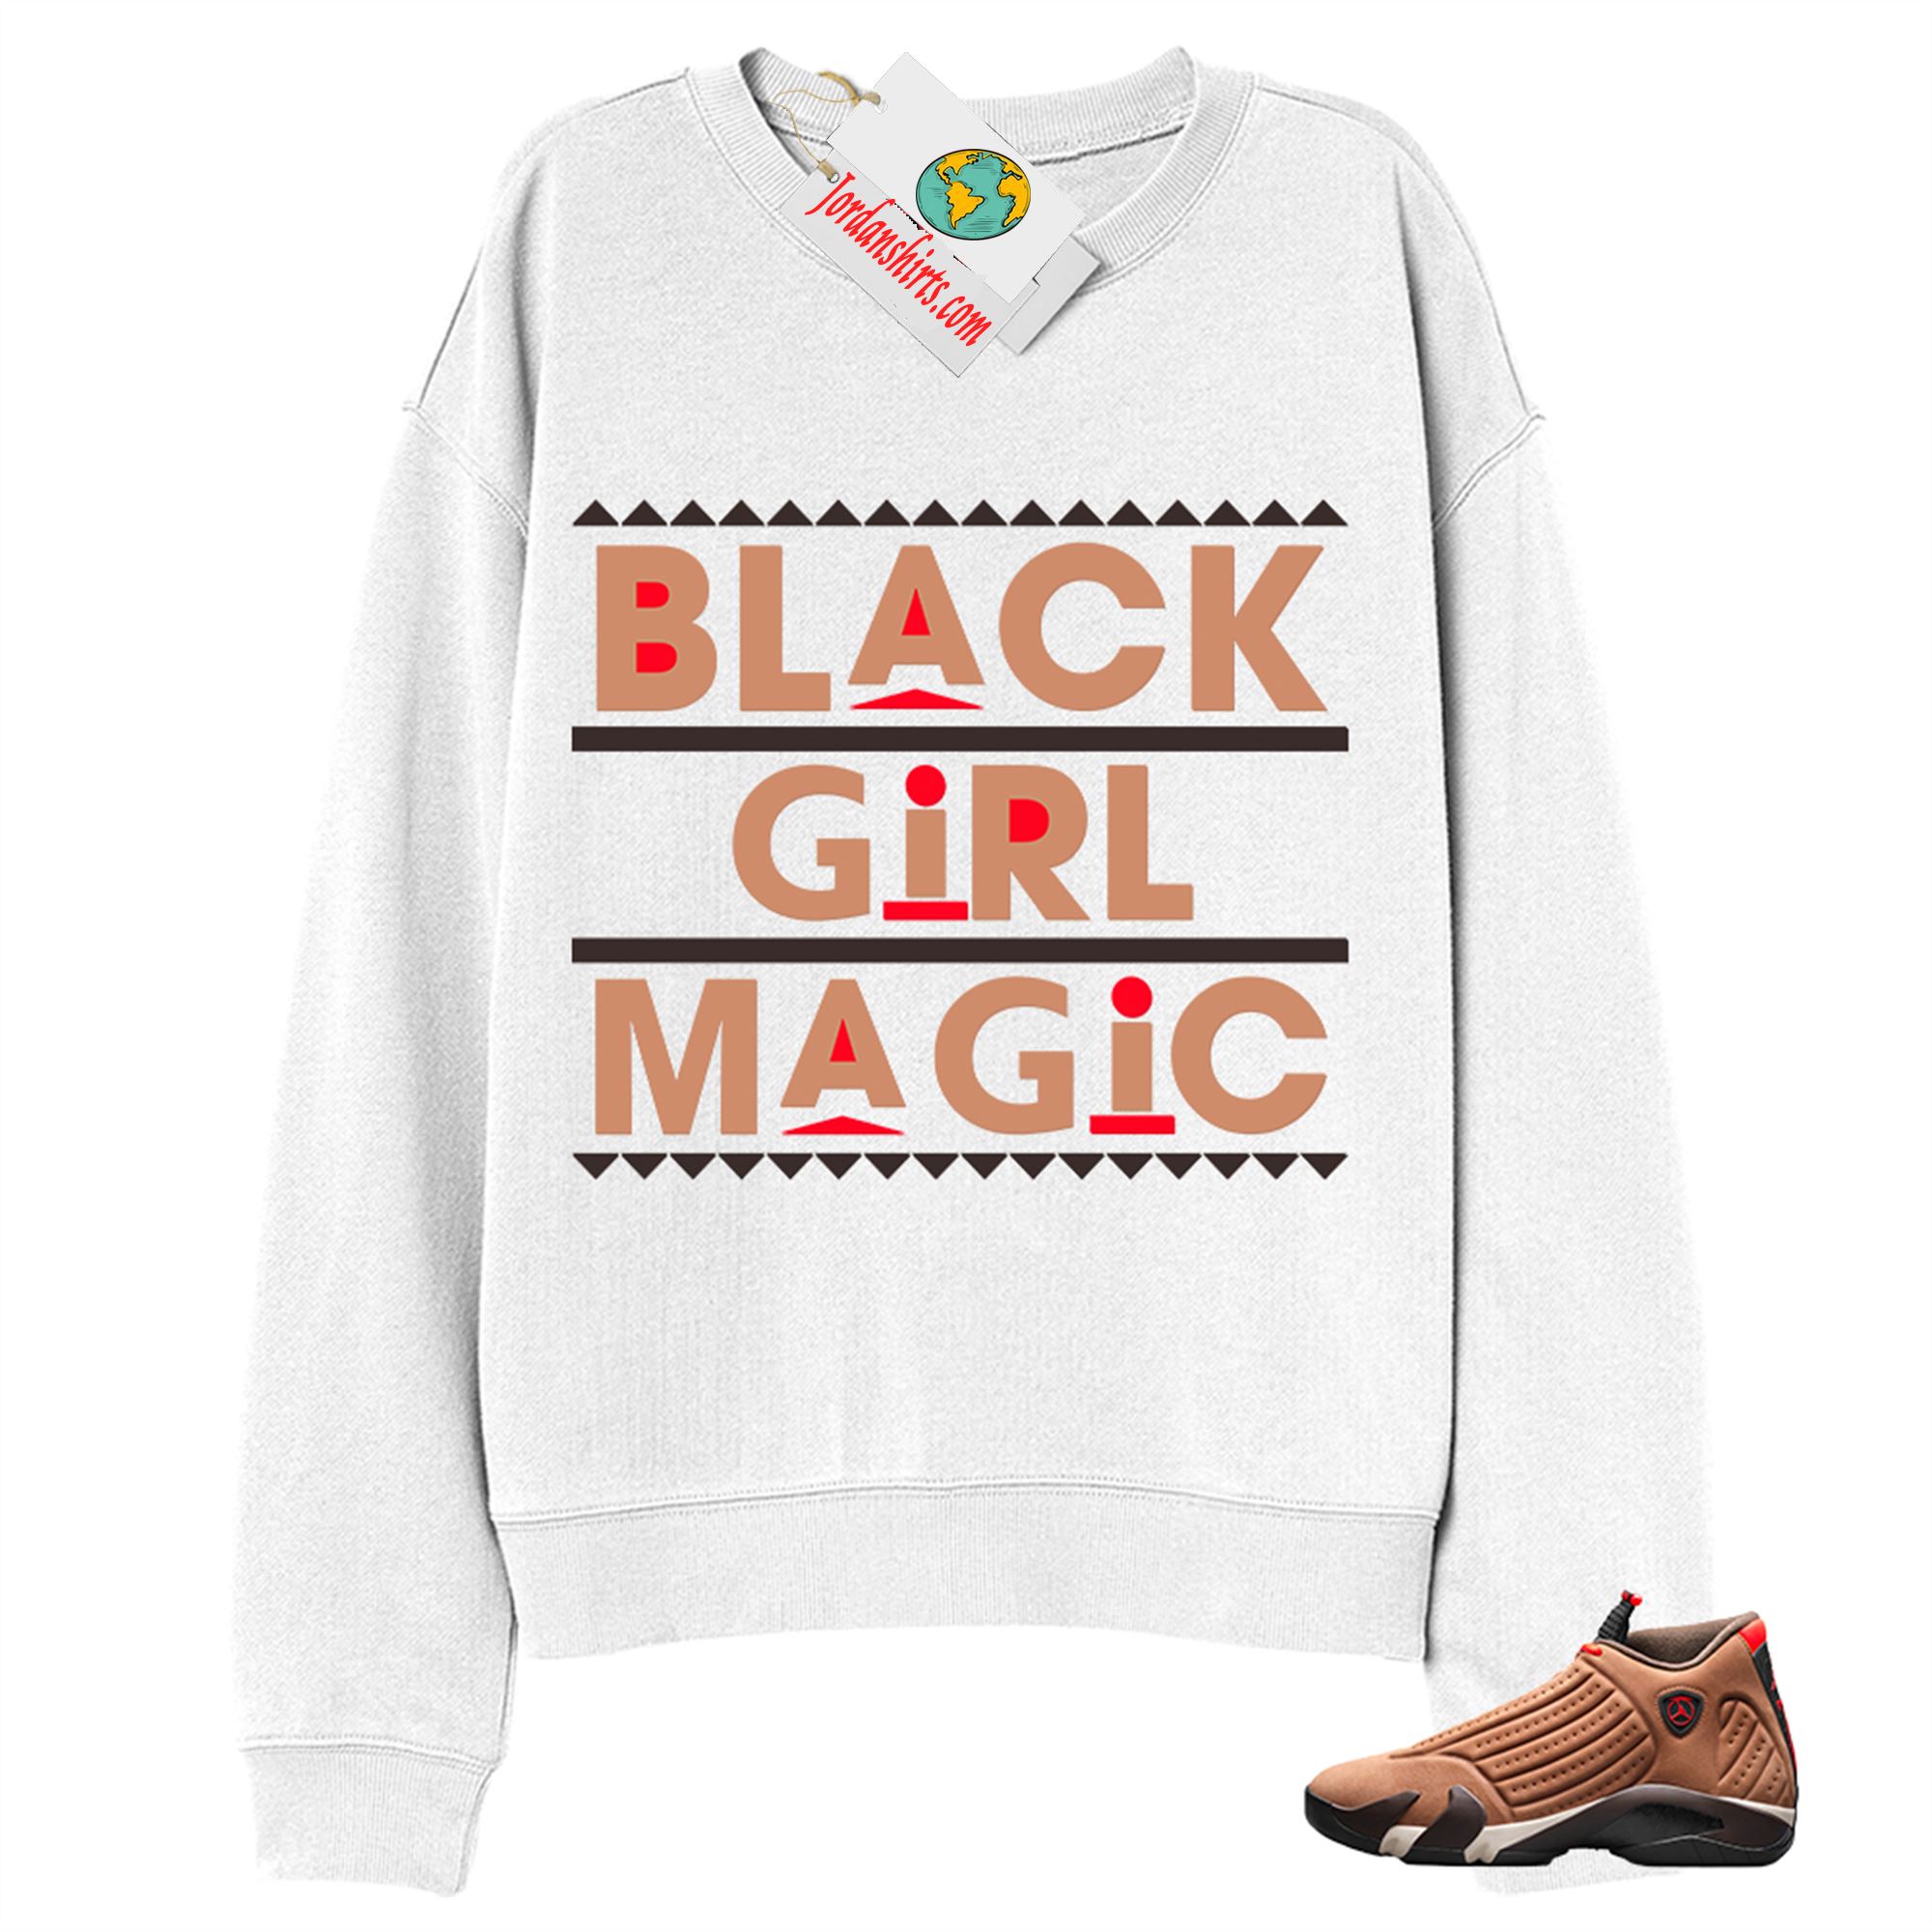 Jordan 14 Sweatshirt, Black Girl Magic White Sweatshirt Air Jordan 14 Winterized 14s Plus Size Up To 5xl